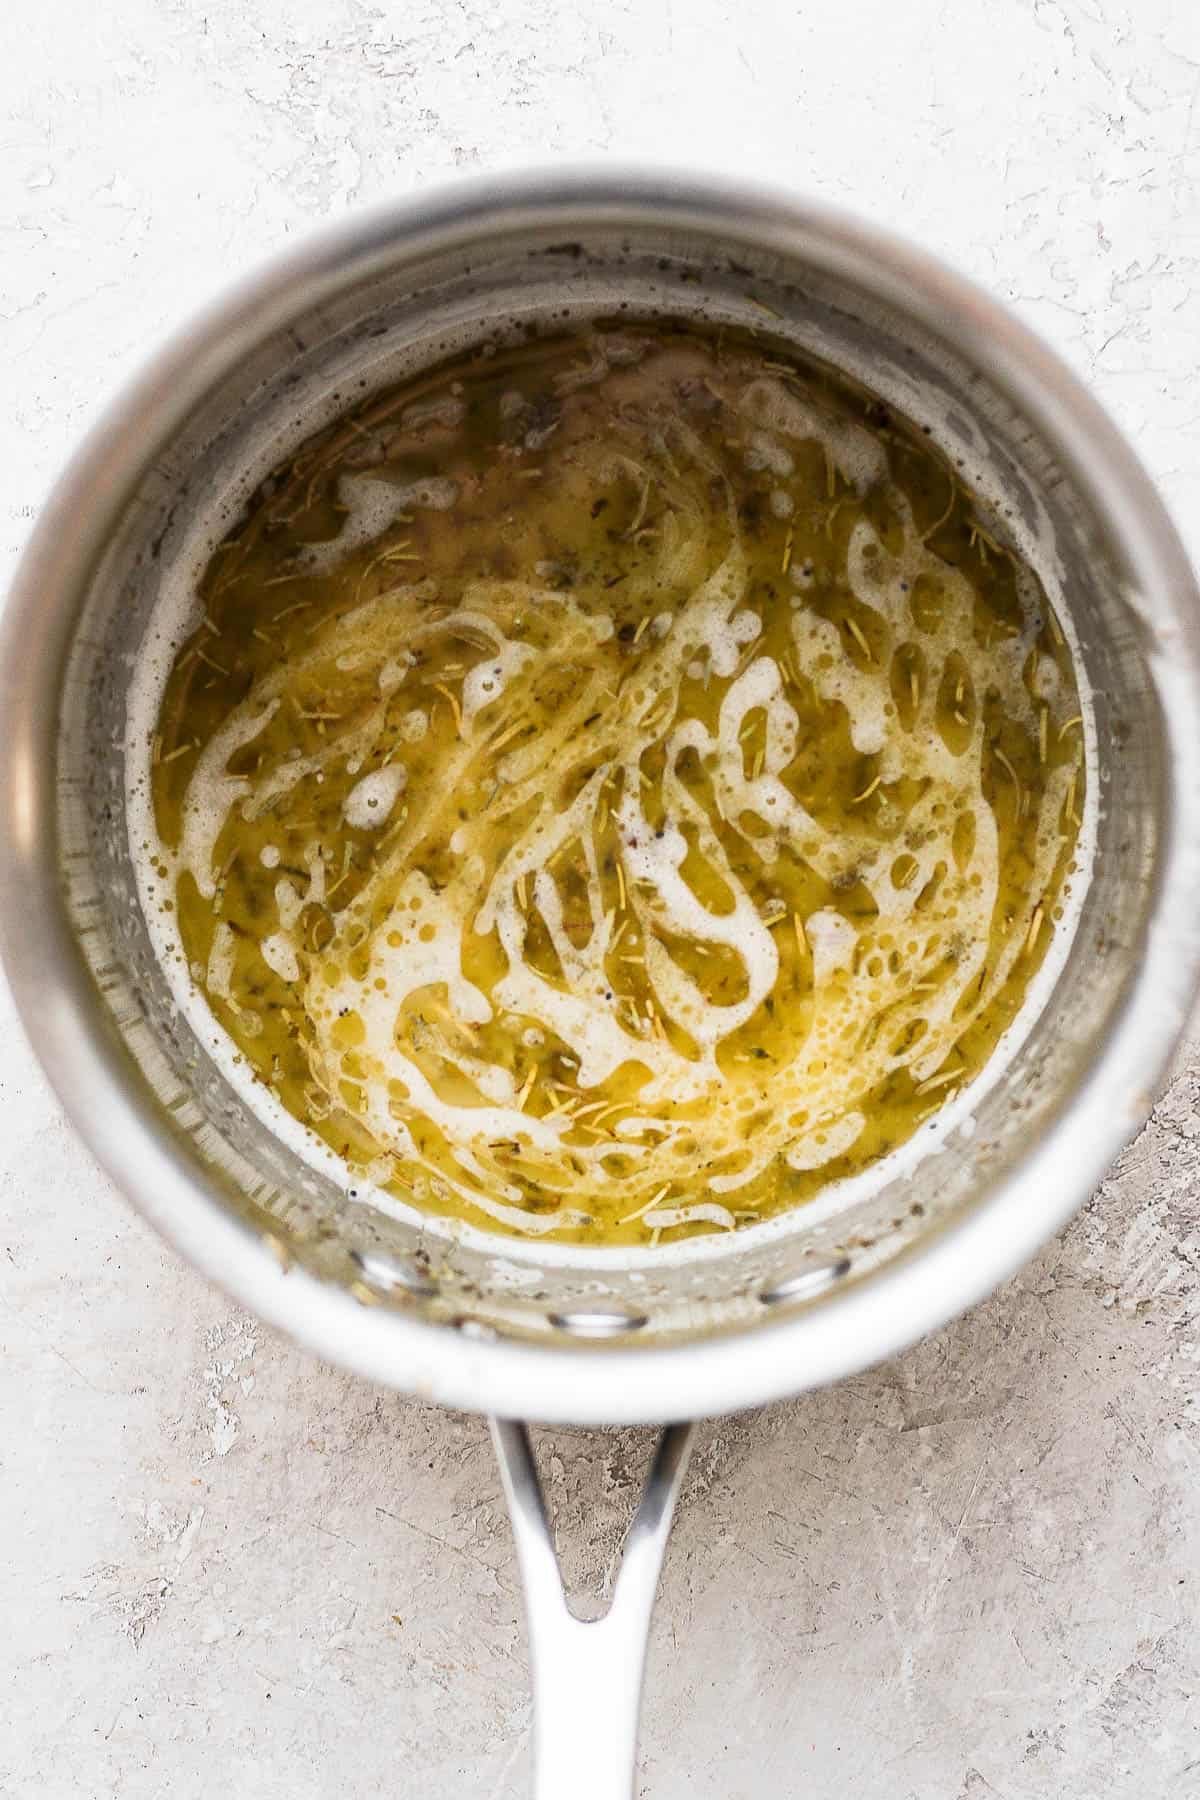 Melted turkey baste in a saucepan.